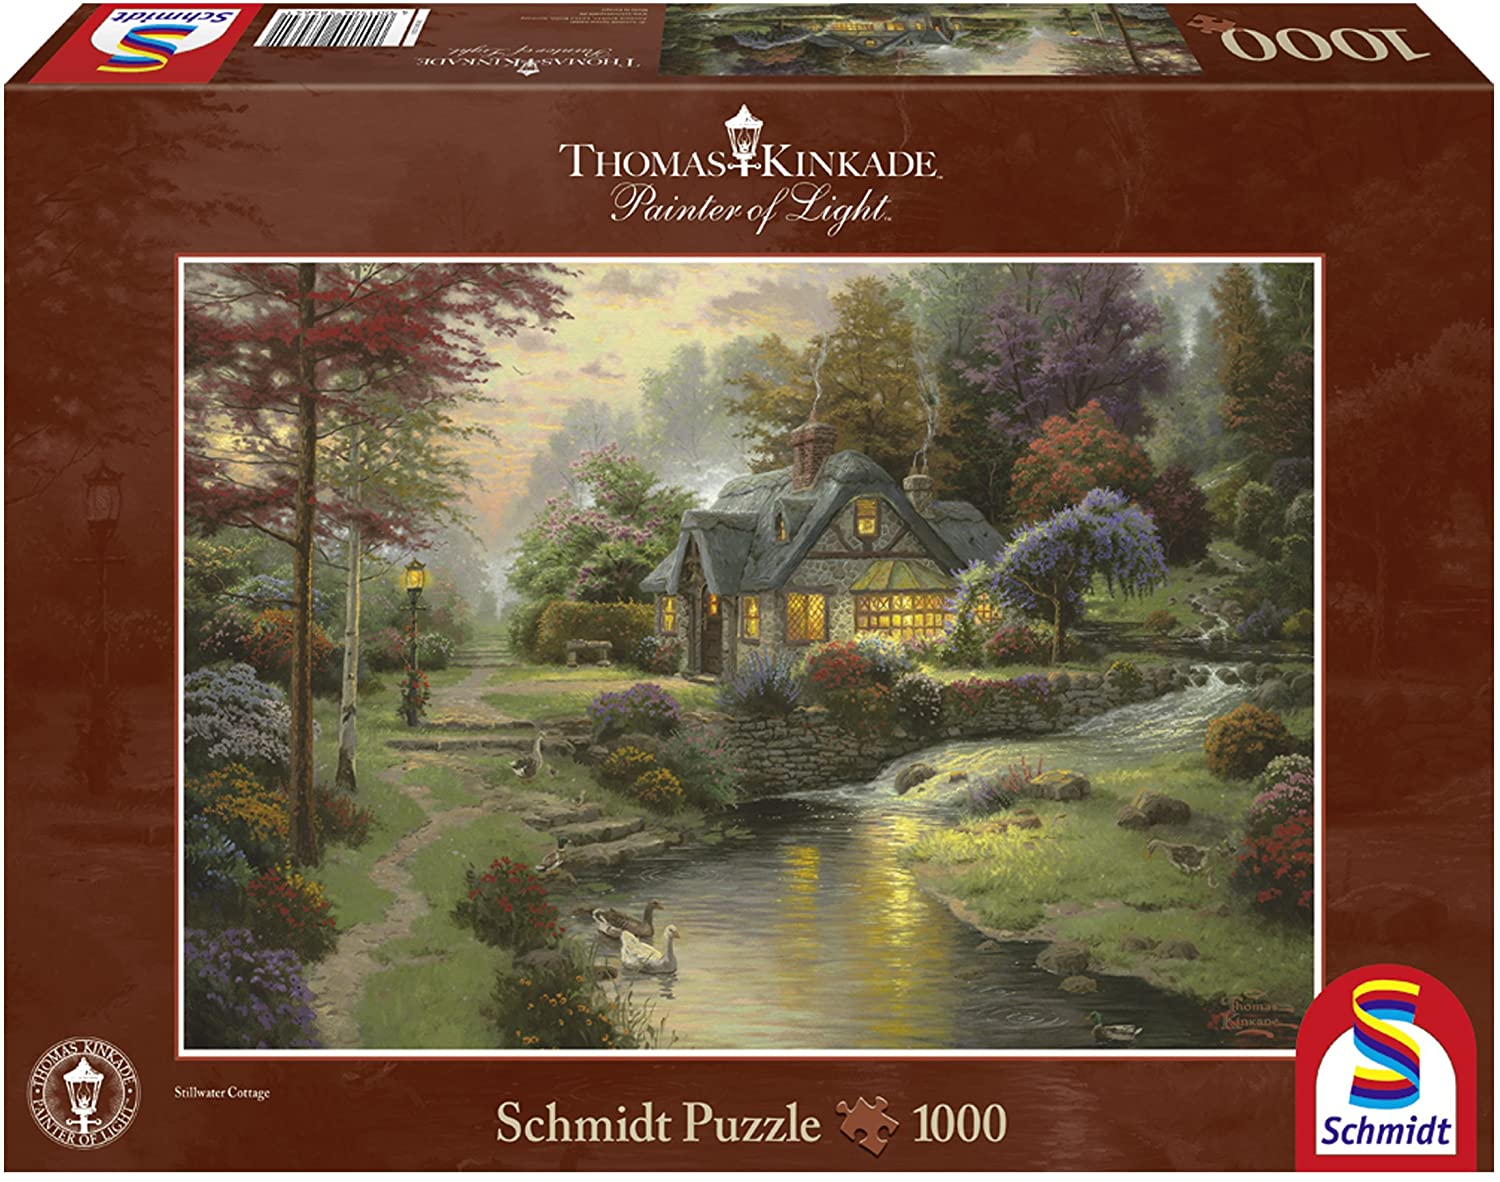 Schmidt puzzle 1000 pieces, Thomas kinkade. Sunset